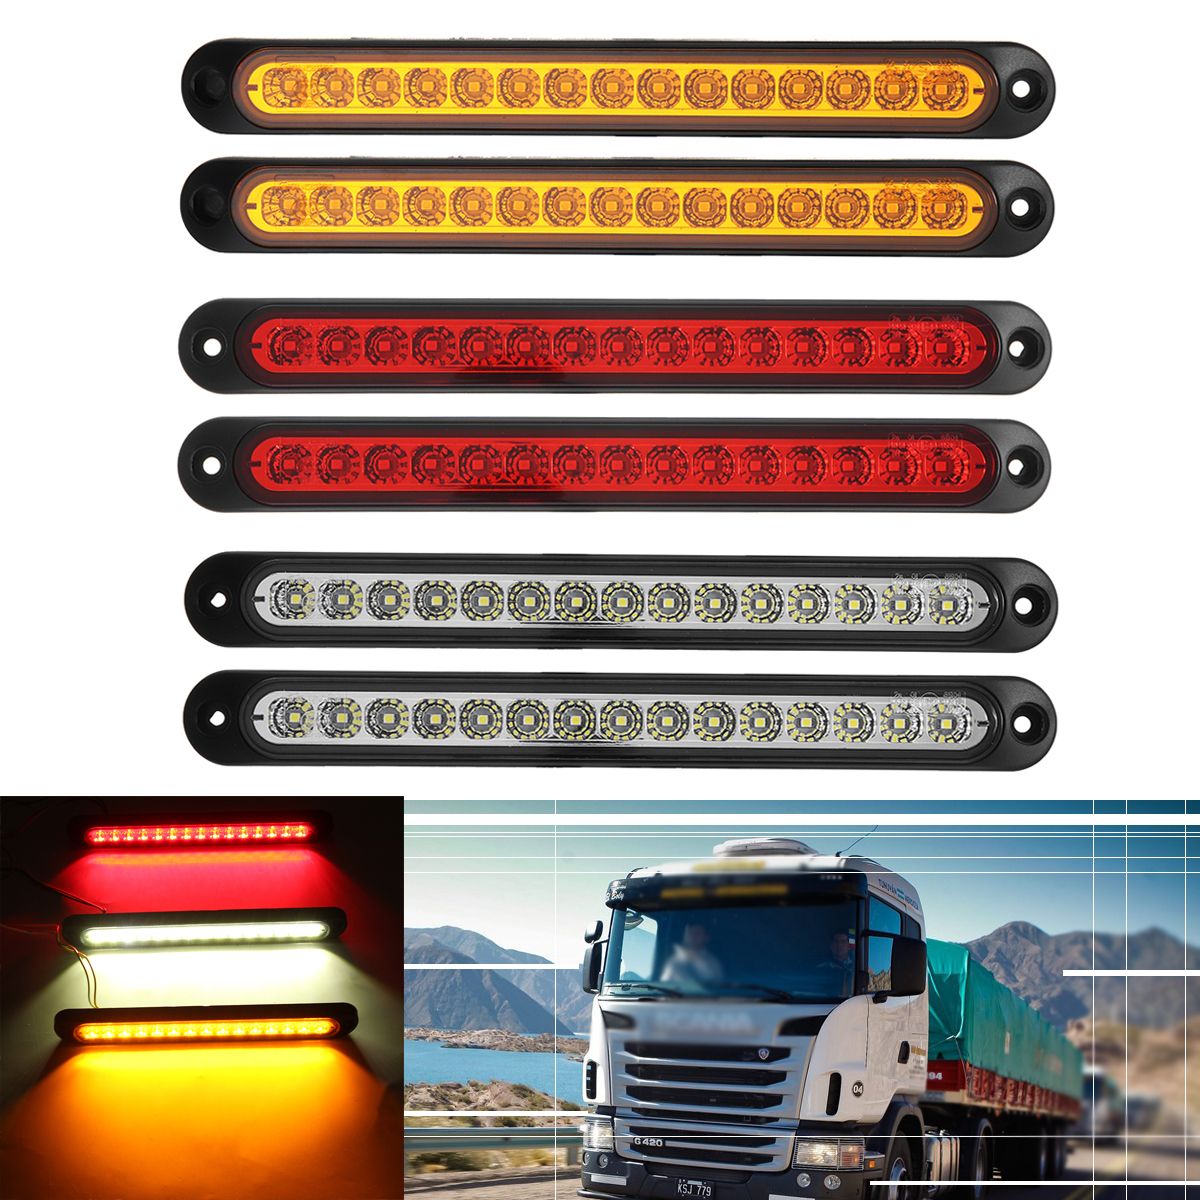 6Pcs-15LED-Tail-Light-Ultra-slim-Stop-Reverse-Turn-Signal-Lights-10-30V-for-Trailer-Truck-Caravan-1616943